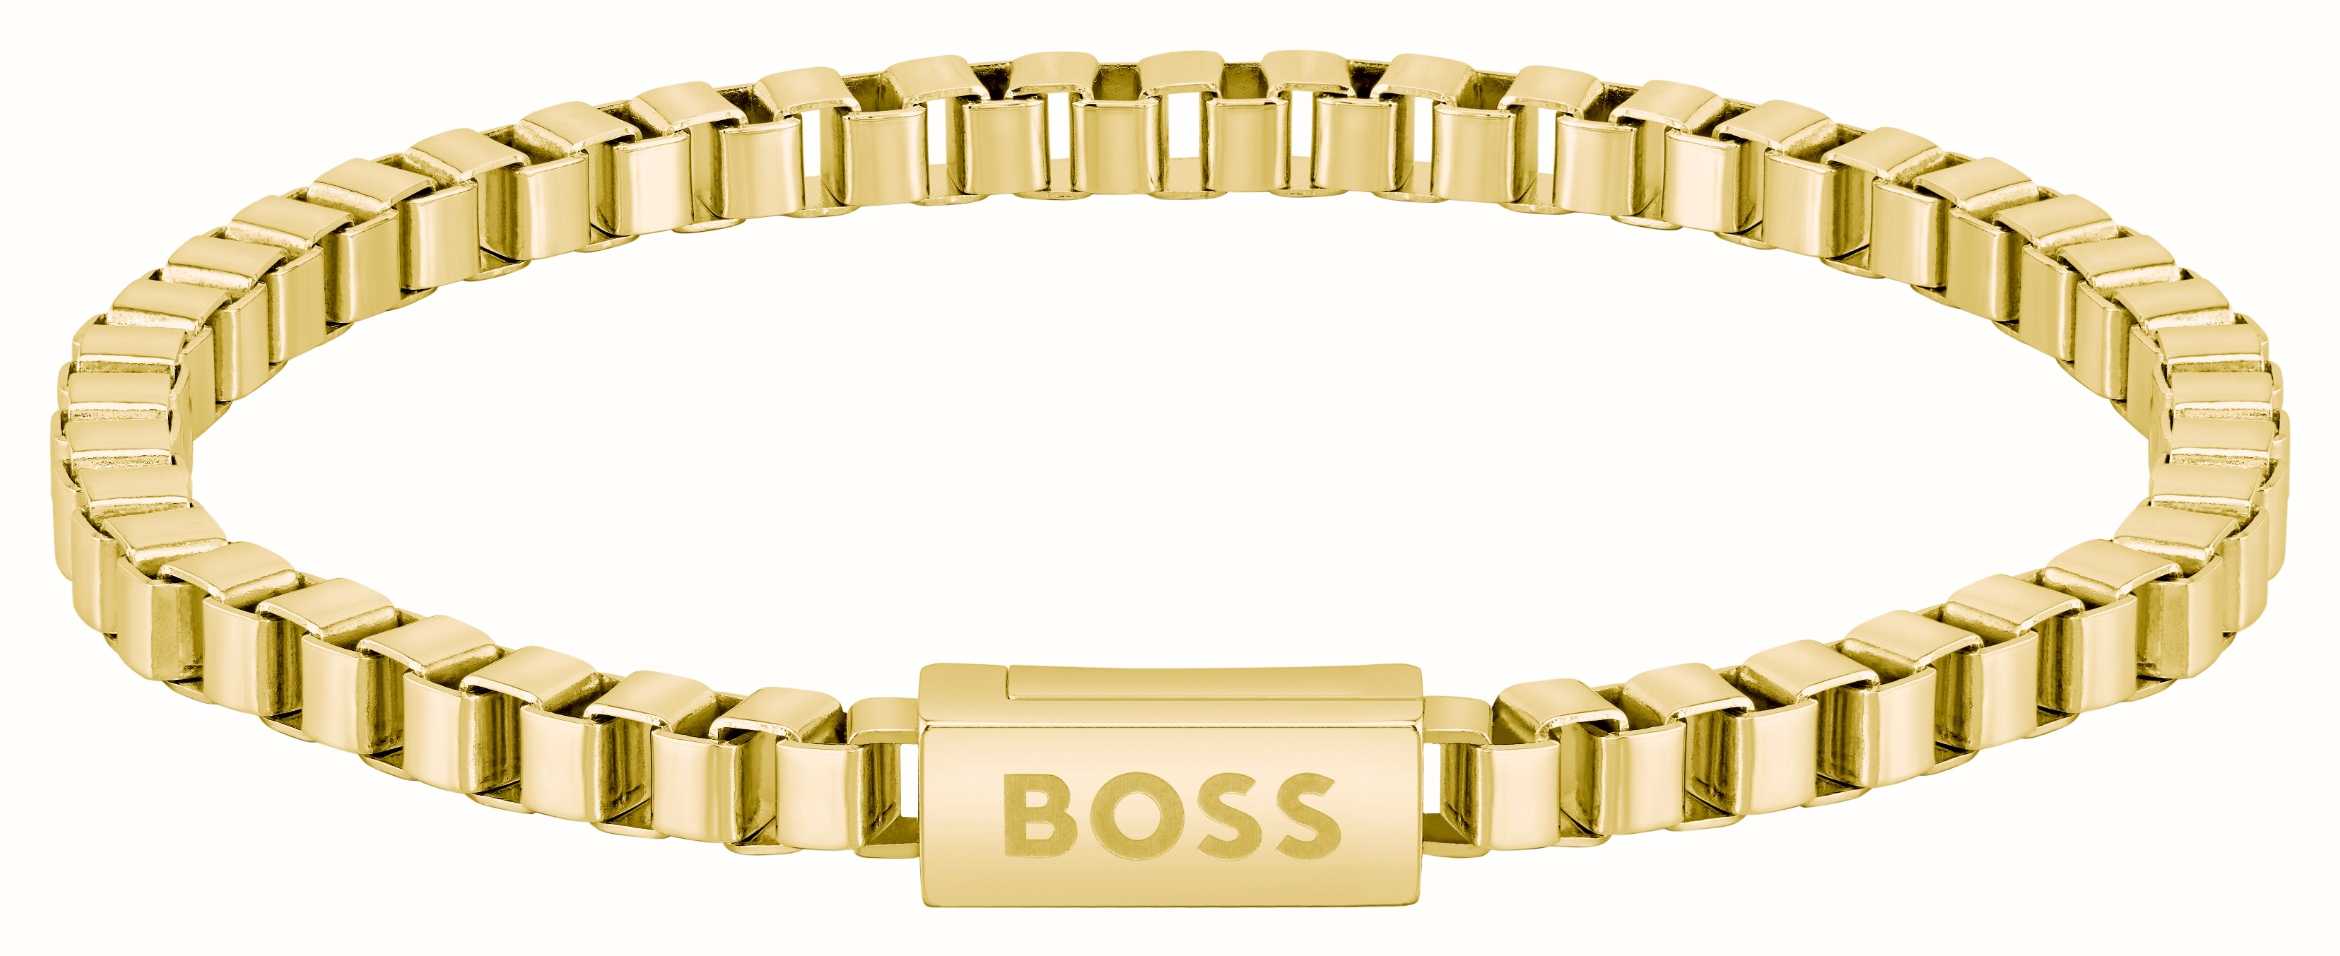 For HUGO BOSS Stainless Steel Metal Watch SILVER BLACK GOLD Strap Band  Bracelet  eBay